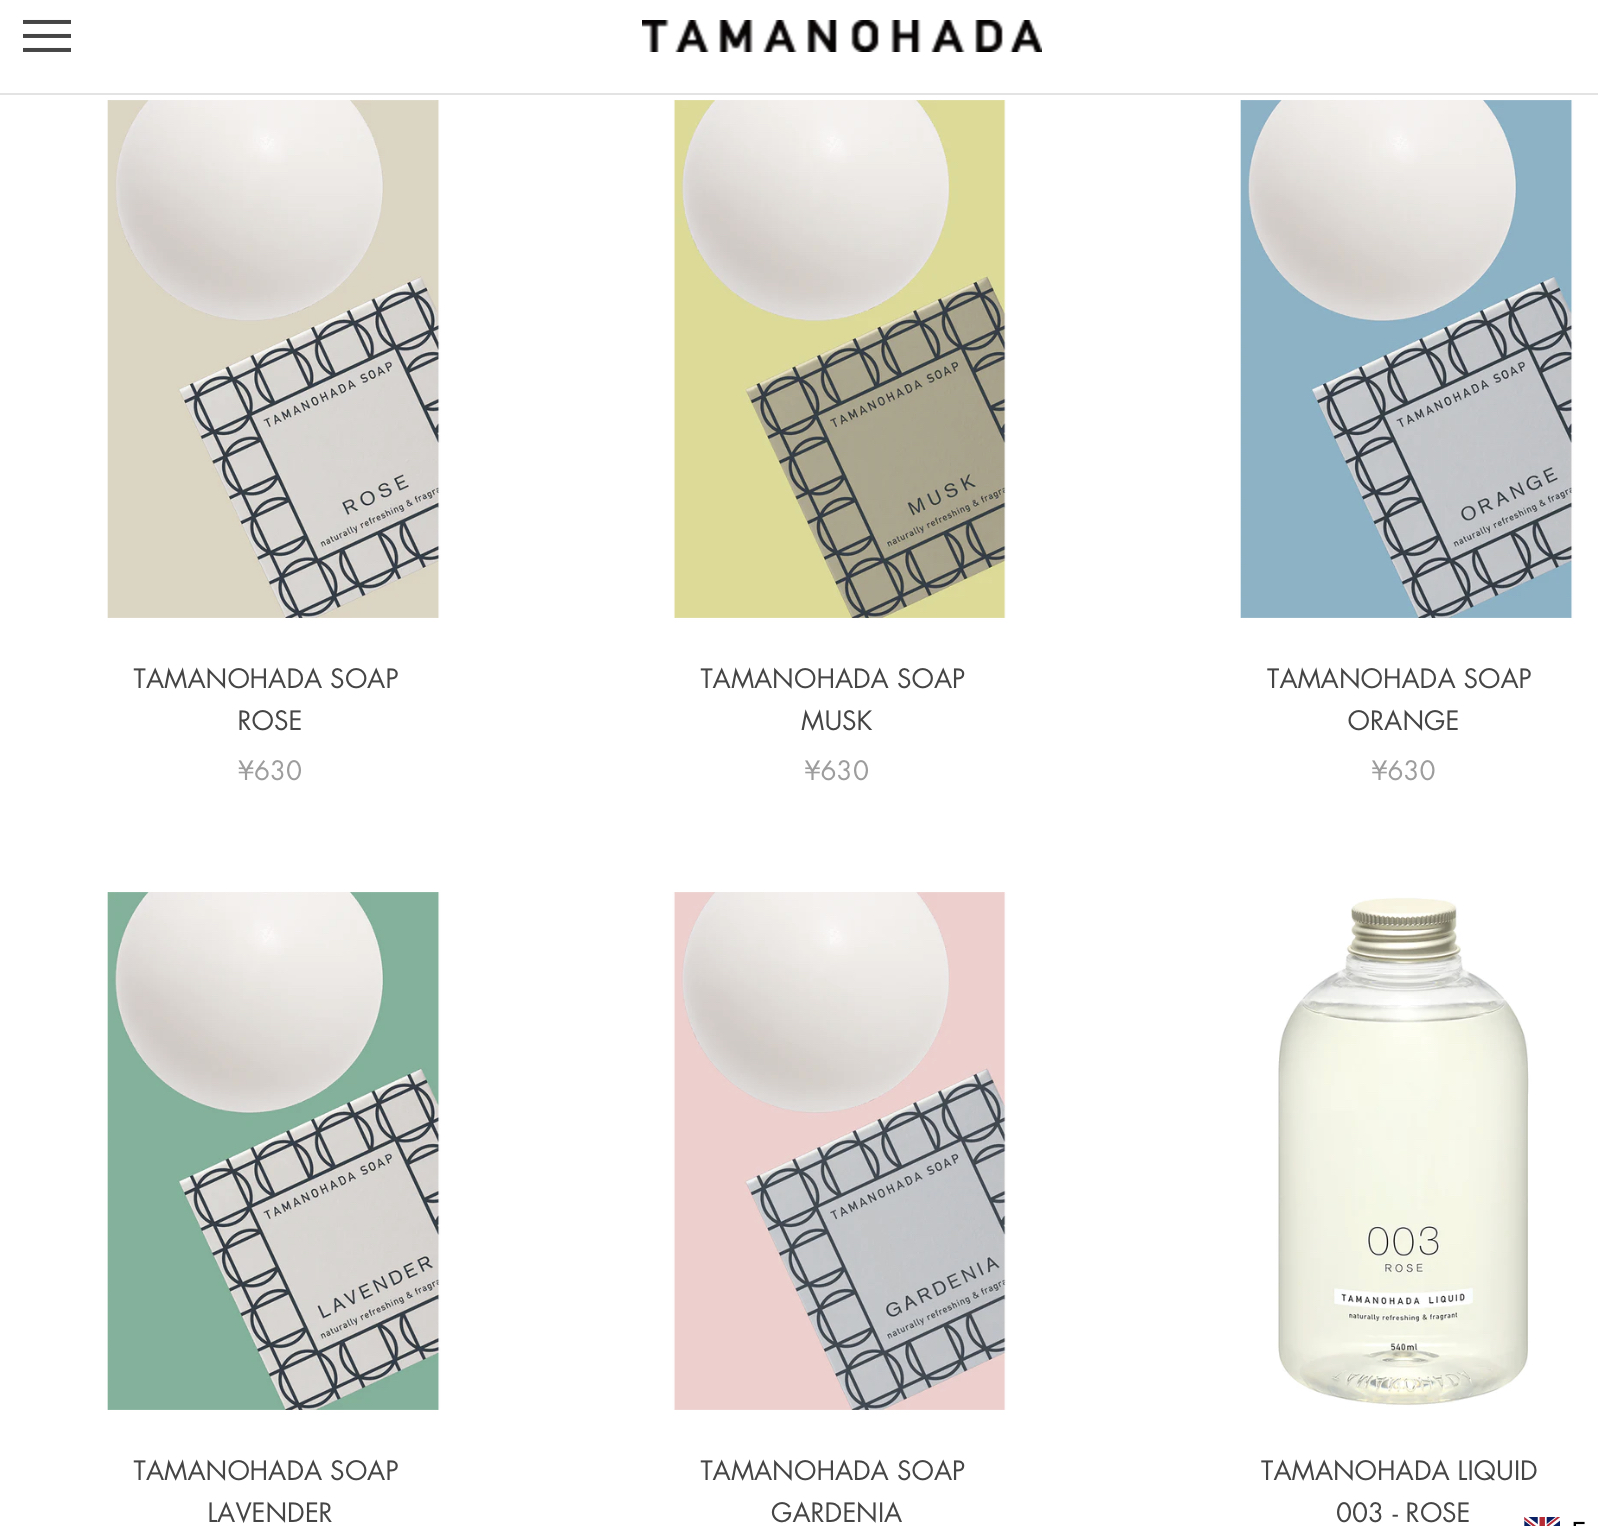 TAMANOHADA SOAP